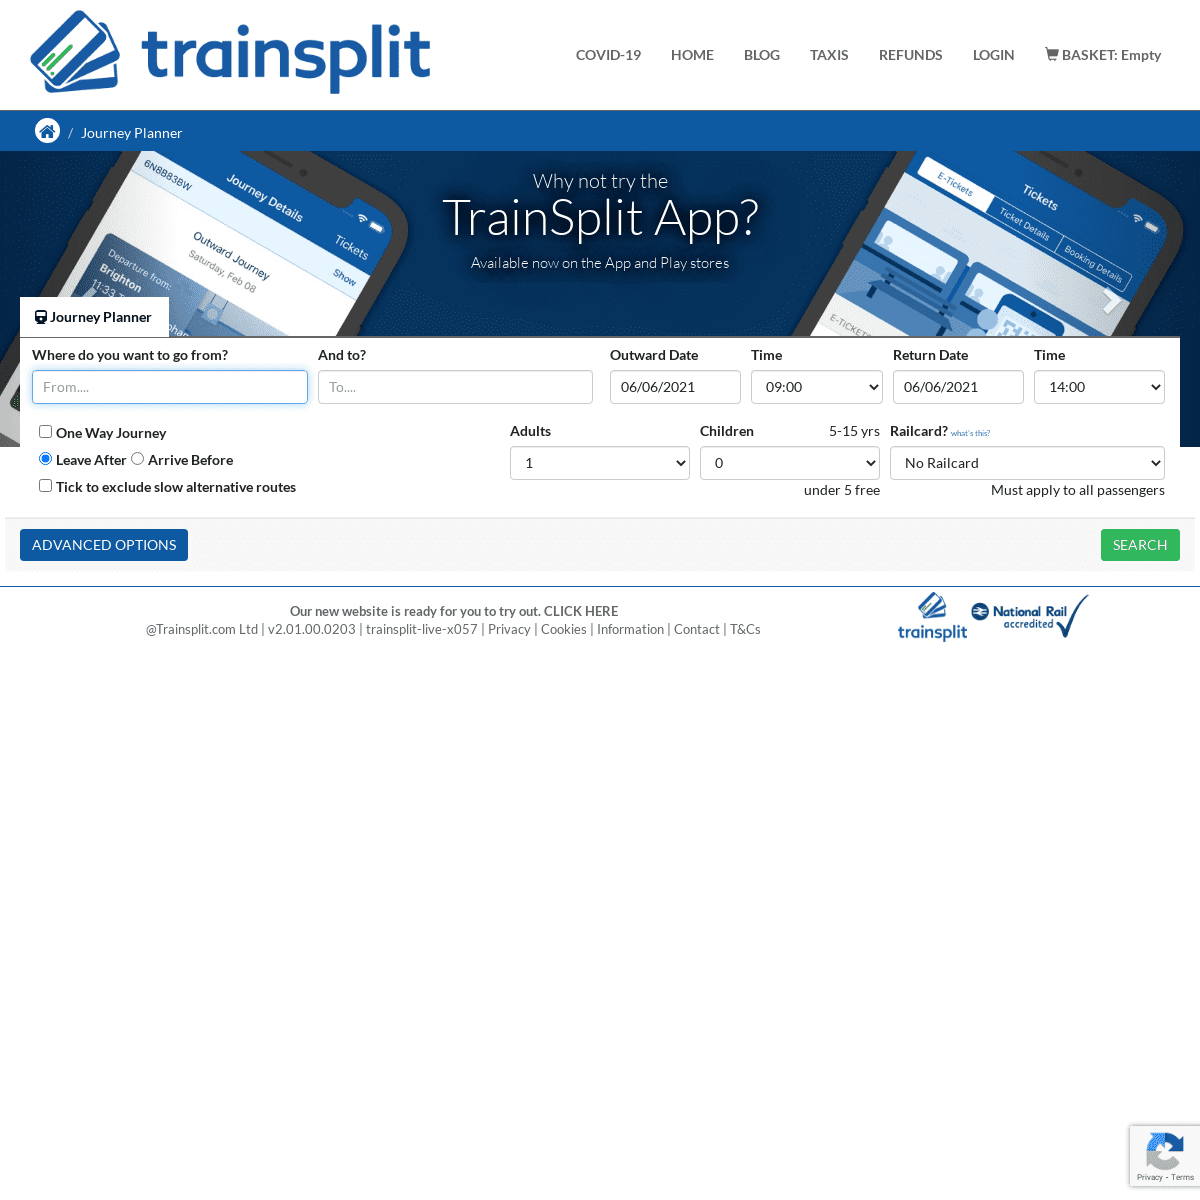 A complete backup of https://trainsplit.com